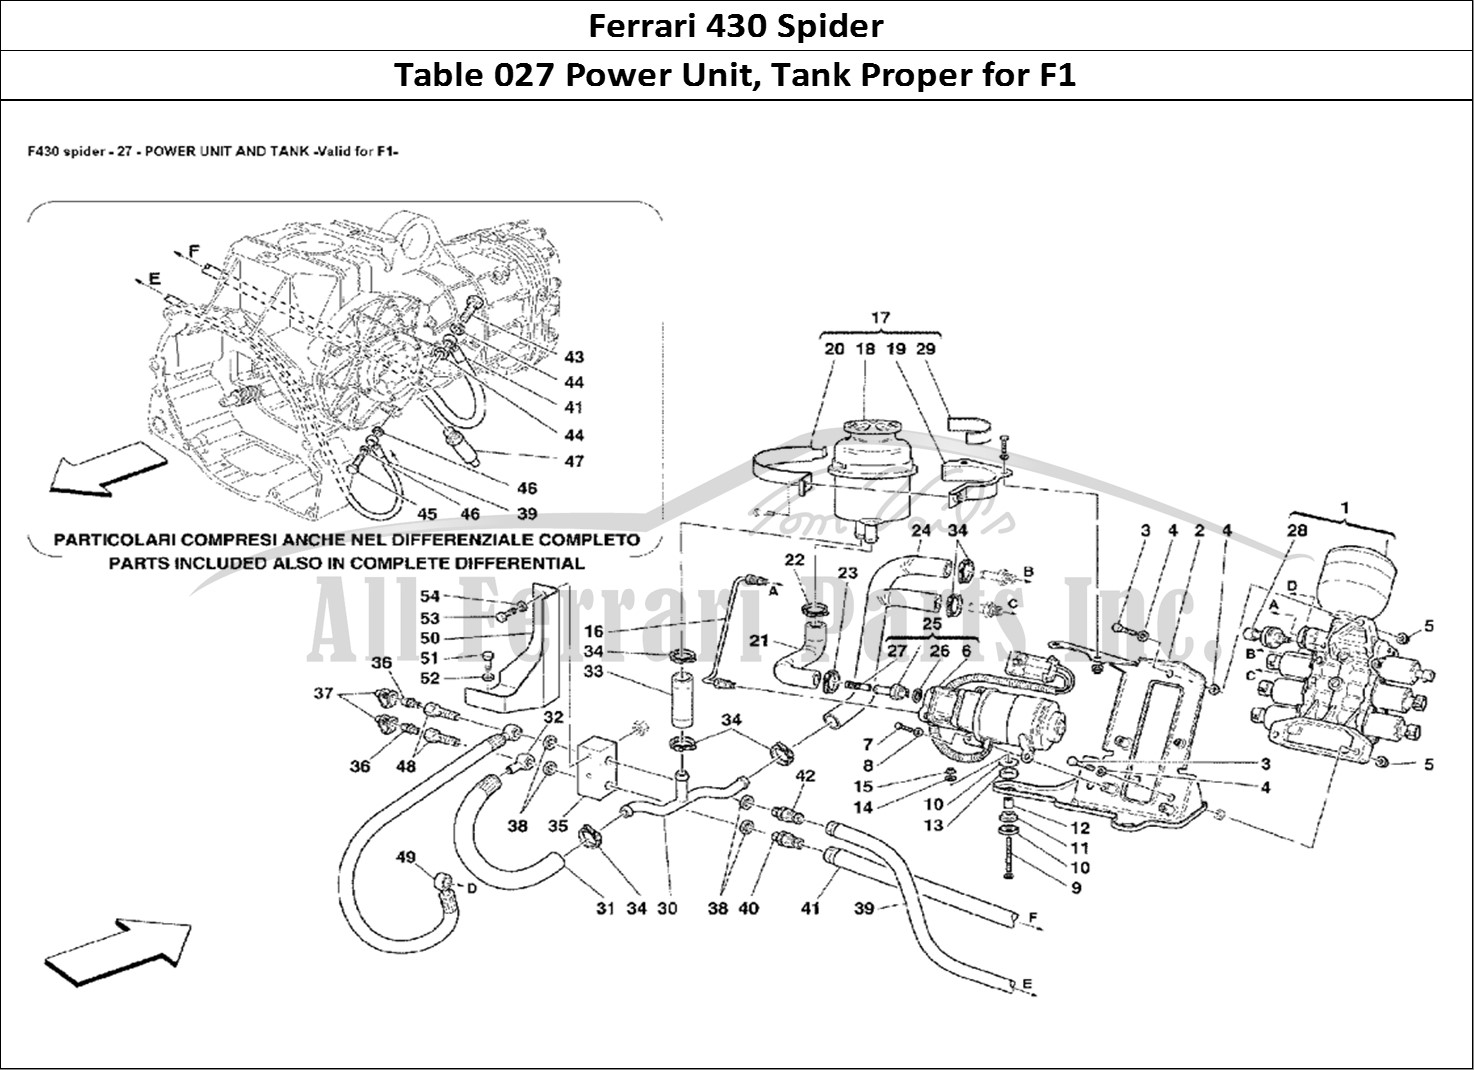 Ferrari Parts Ferrari 430 Spider Page 027 Power Unit and Tank -Vali